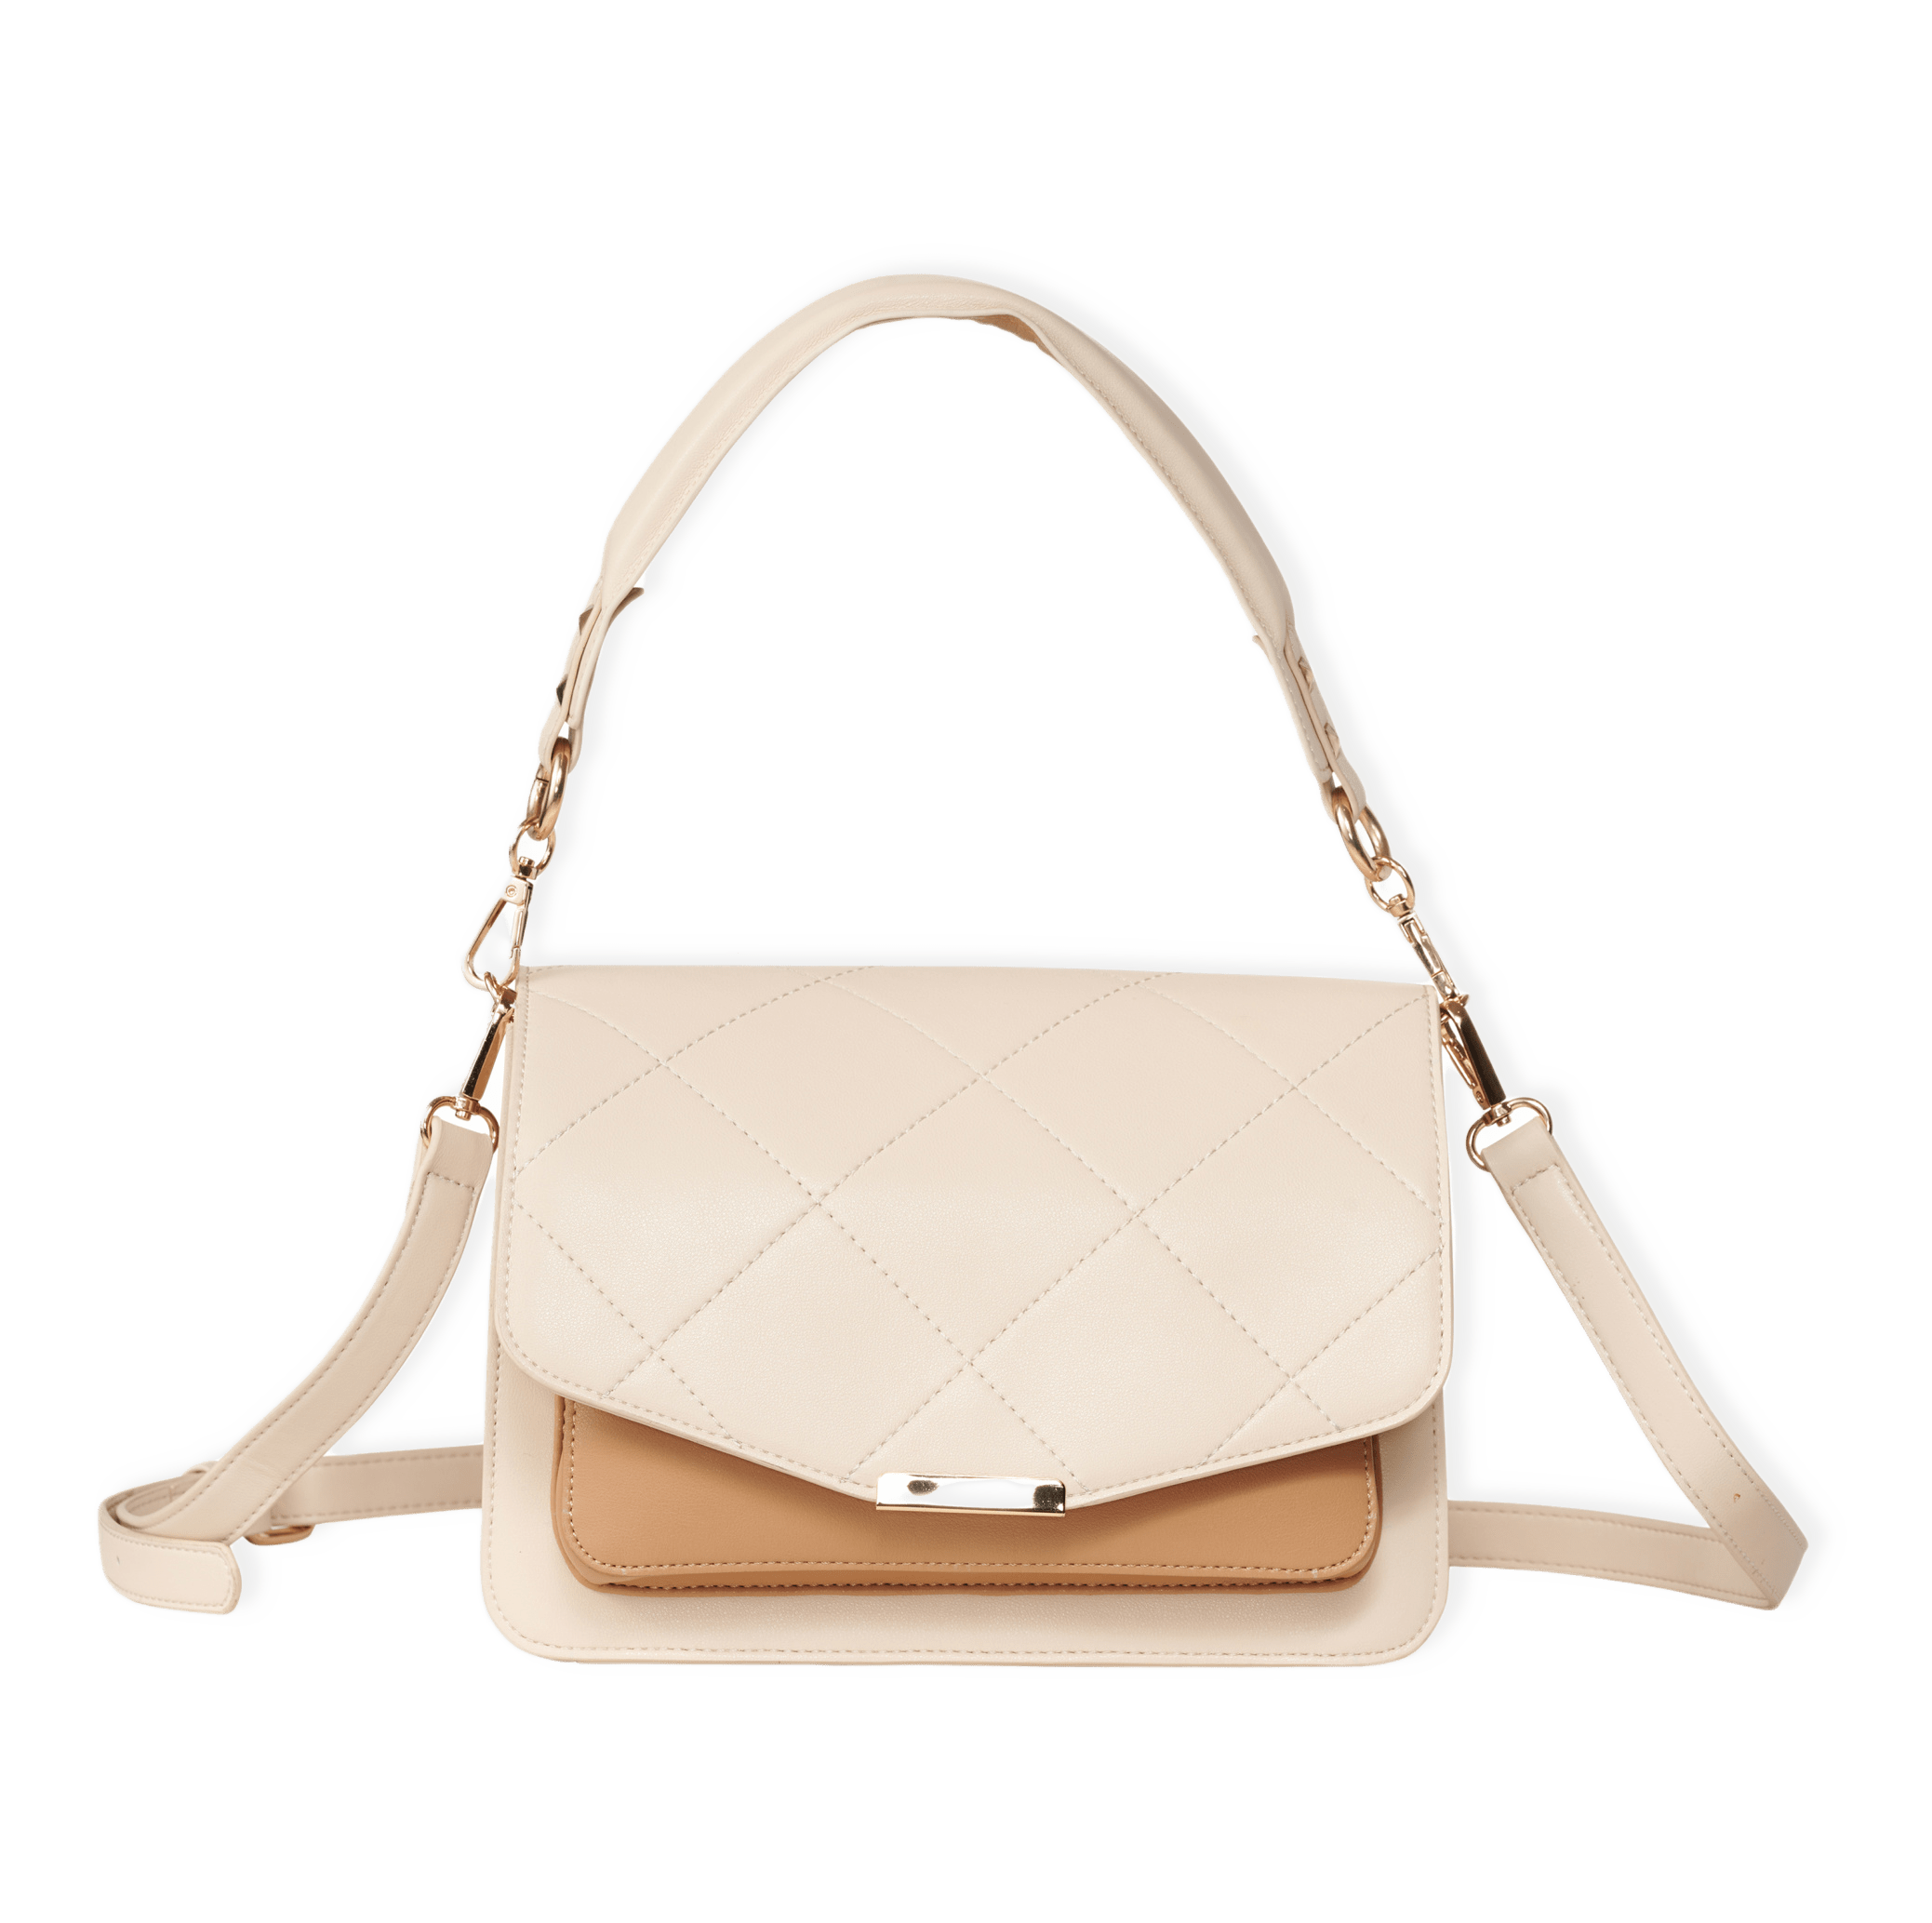 Blanca Multi Compartment Bag - Nude Leather Look från Noella